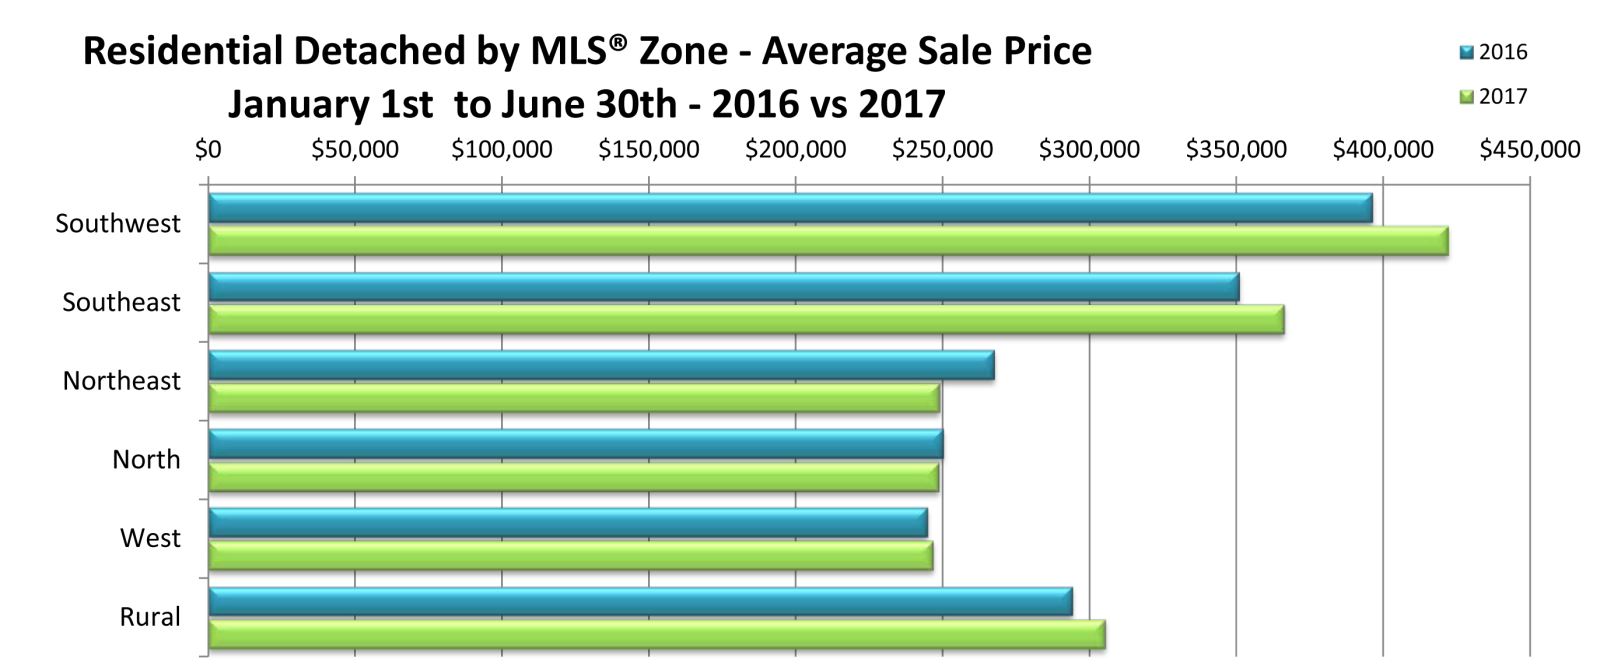 Residential-detached by MLS® Zone - Average Sale Price YTD June 2016 vs 2017